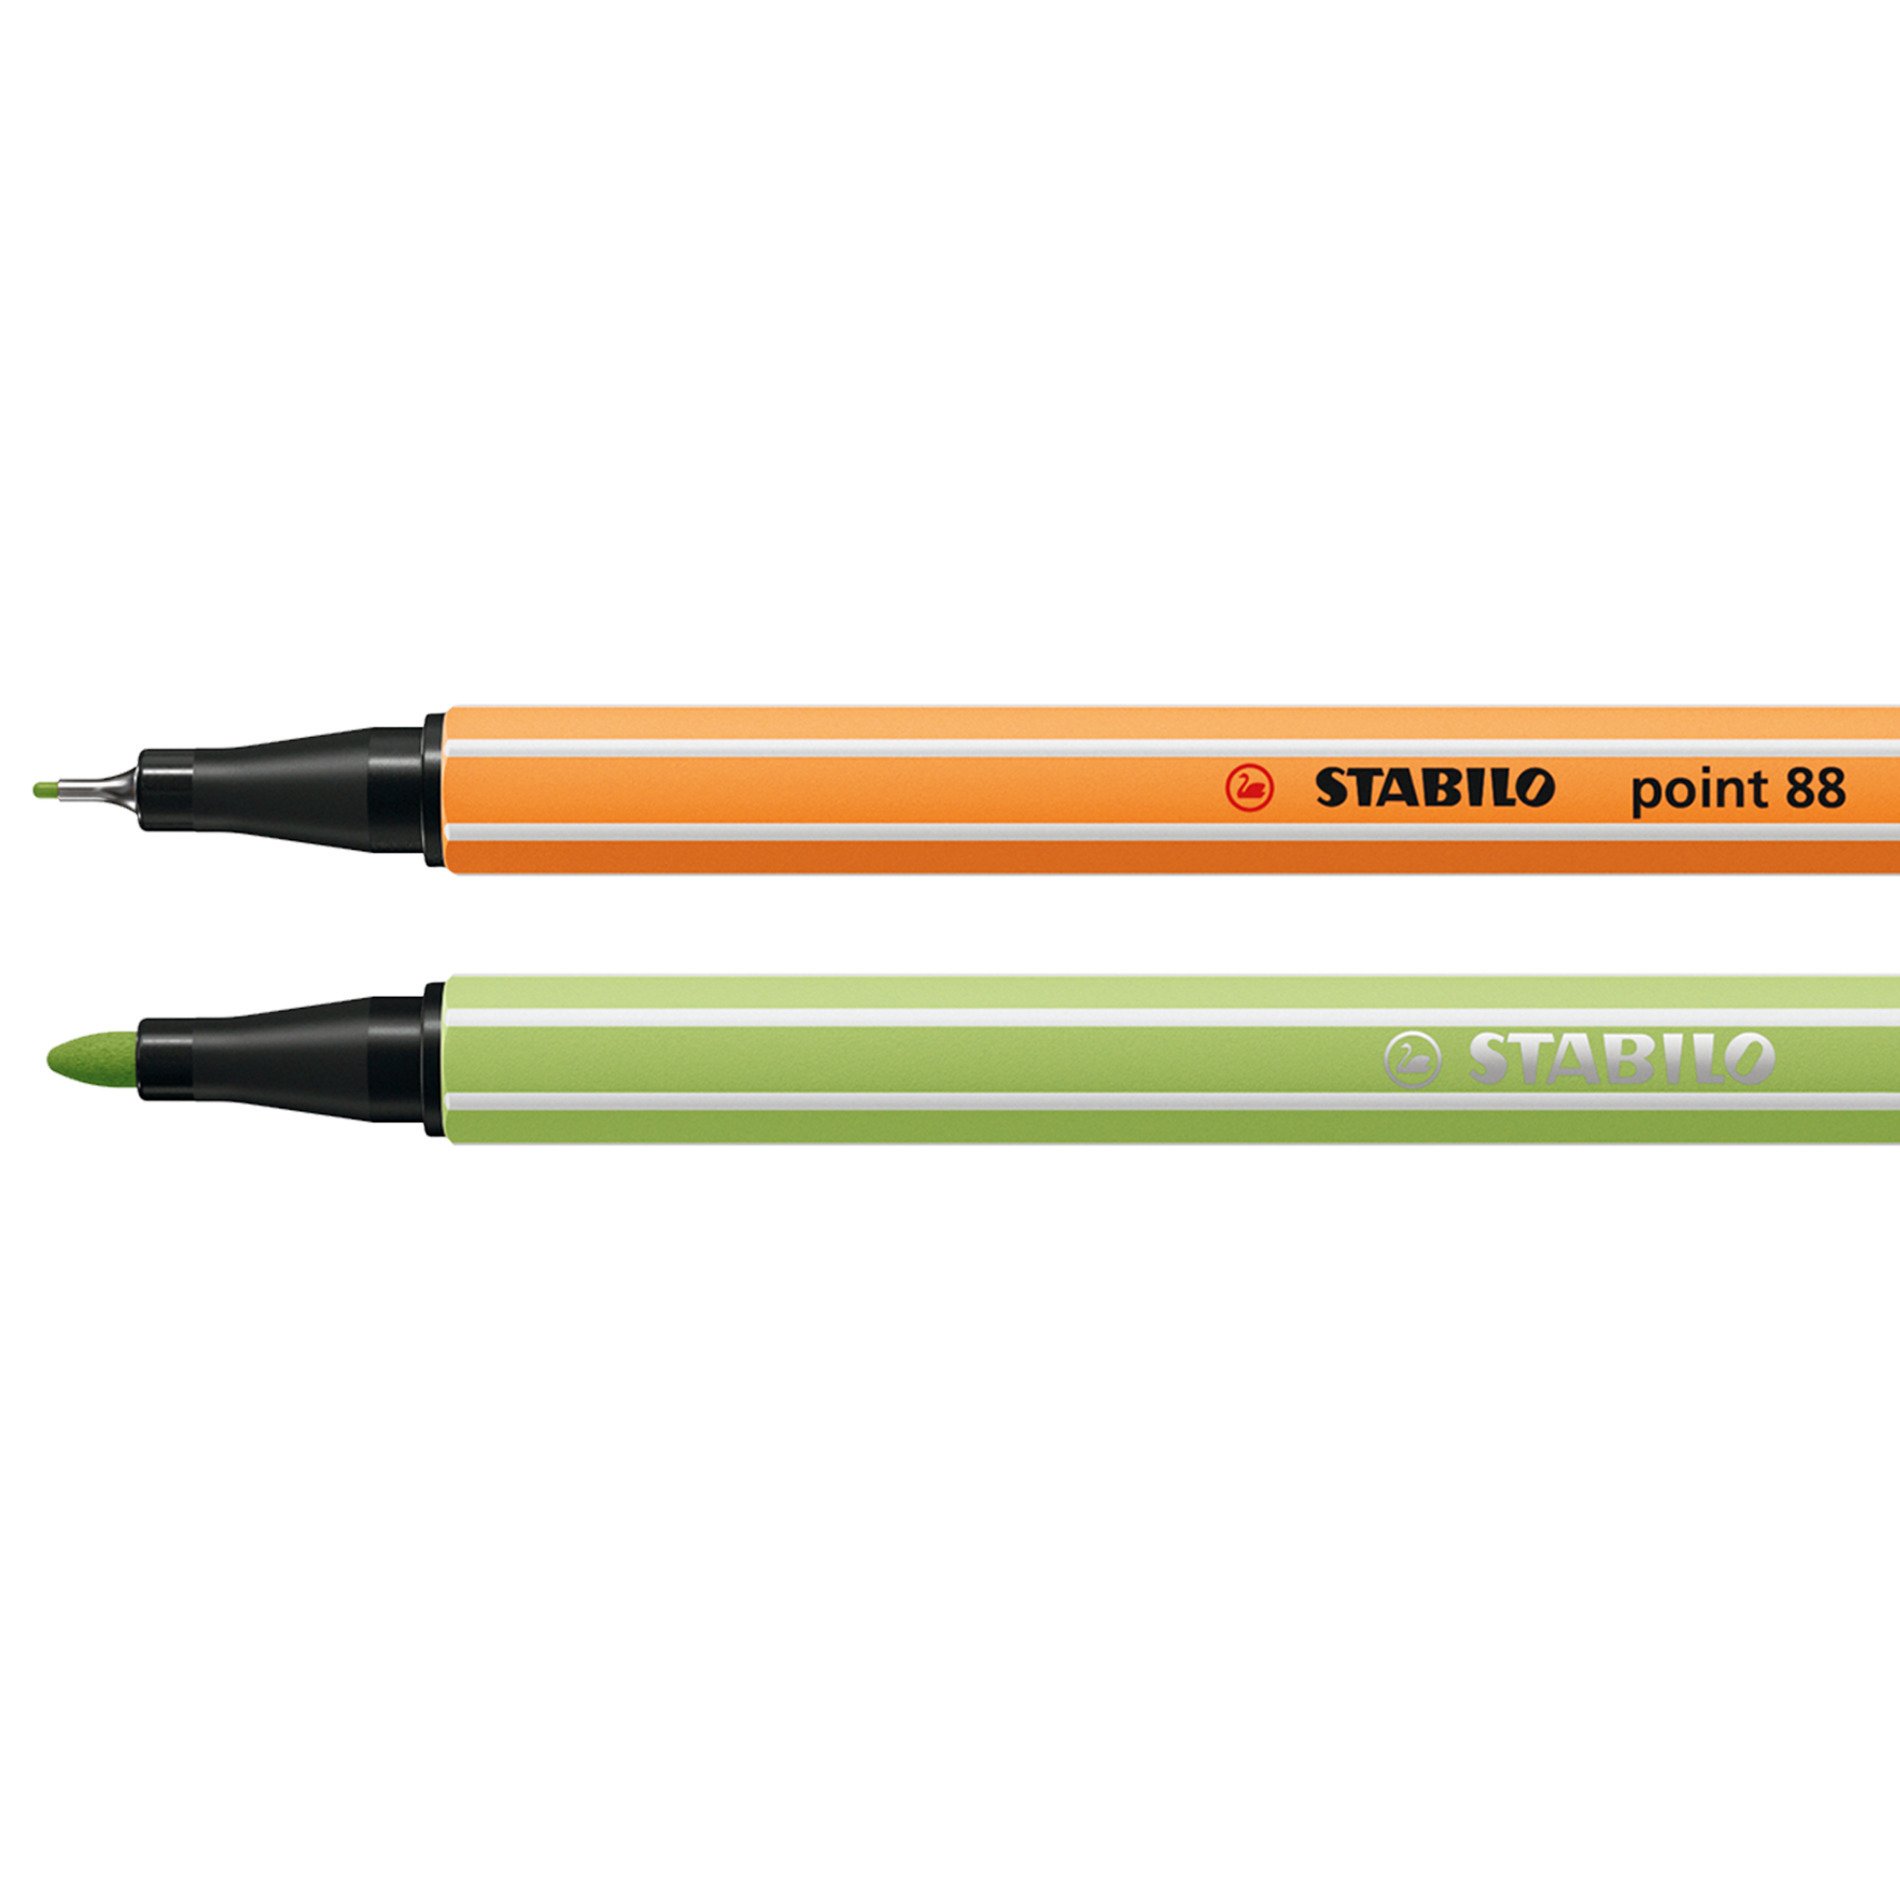 Stylo feutre pointe fine - STABILO point 88 - Etui carton x 15 stylos  feutres pastel- Edition Pastellove